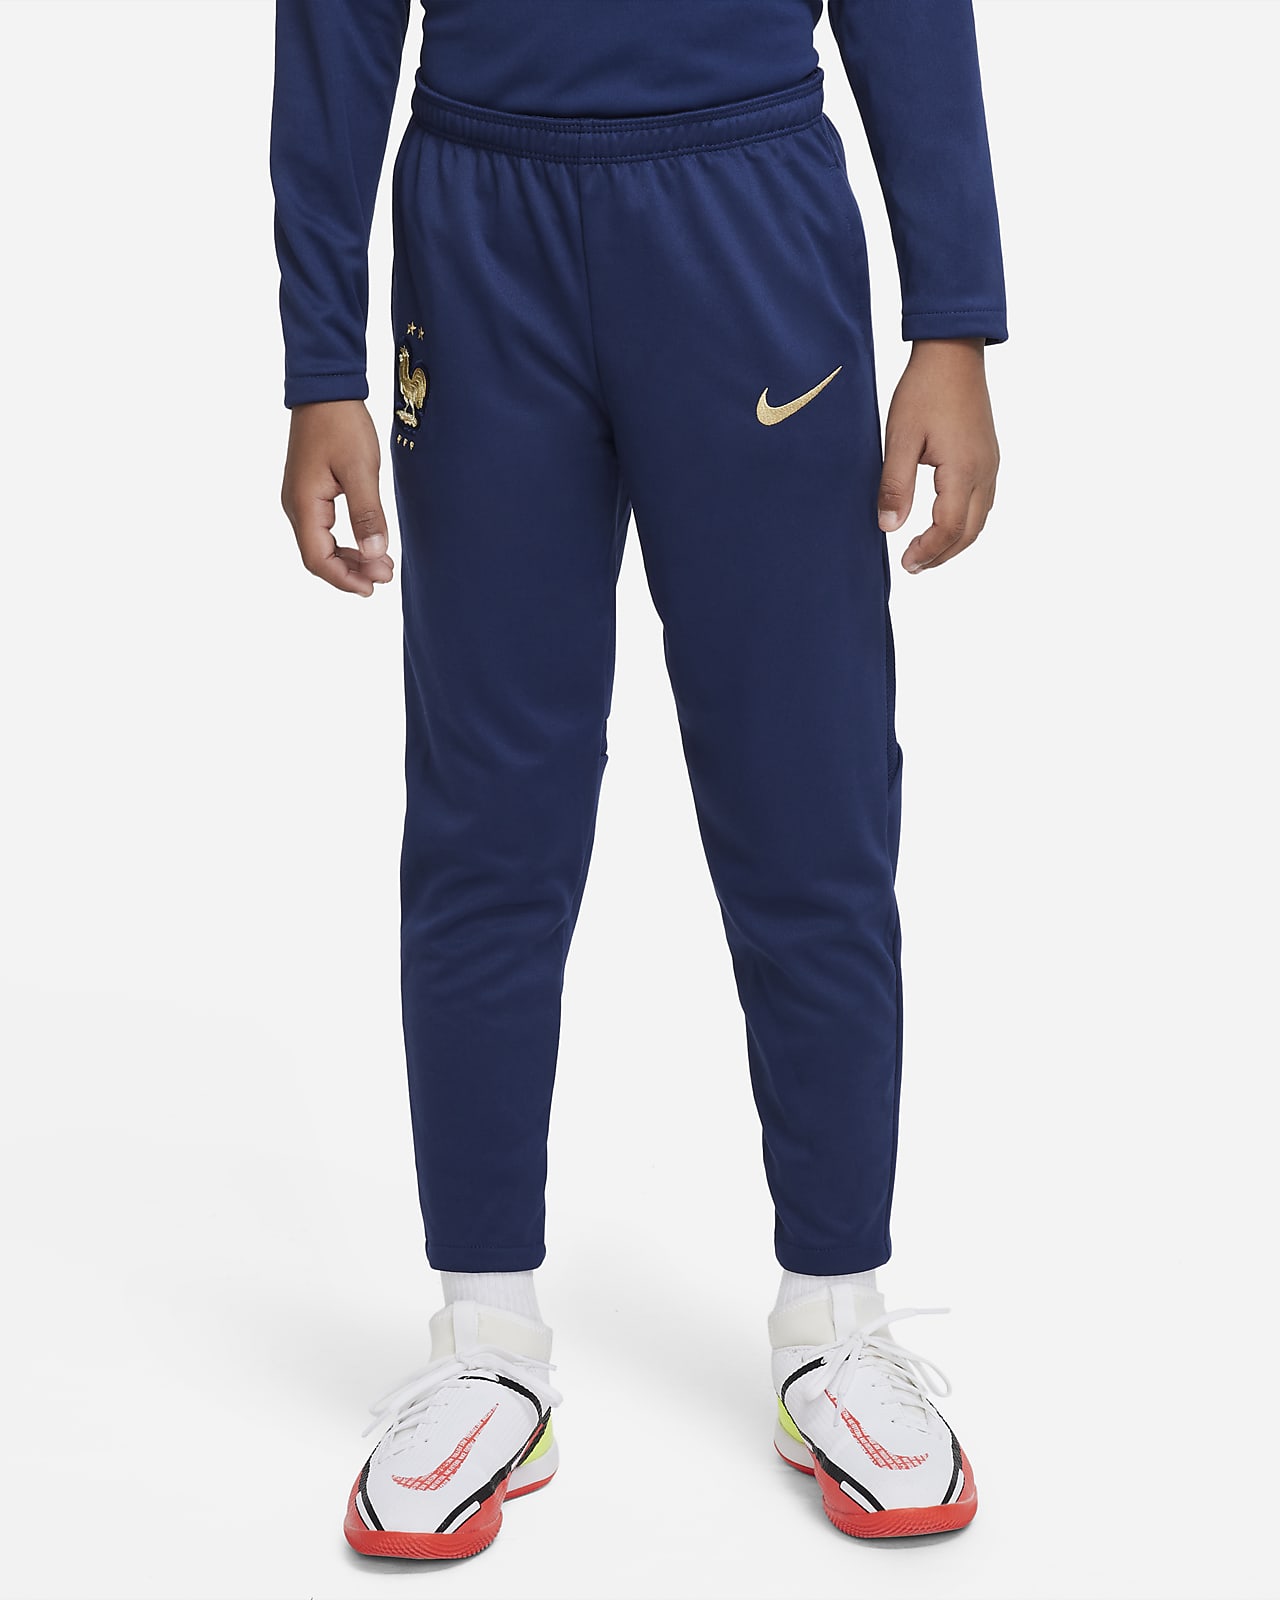 Boys Nike pants size 7 | eBay